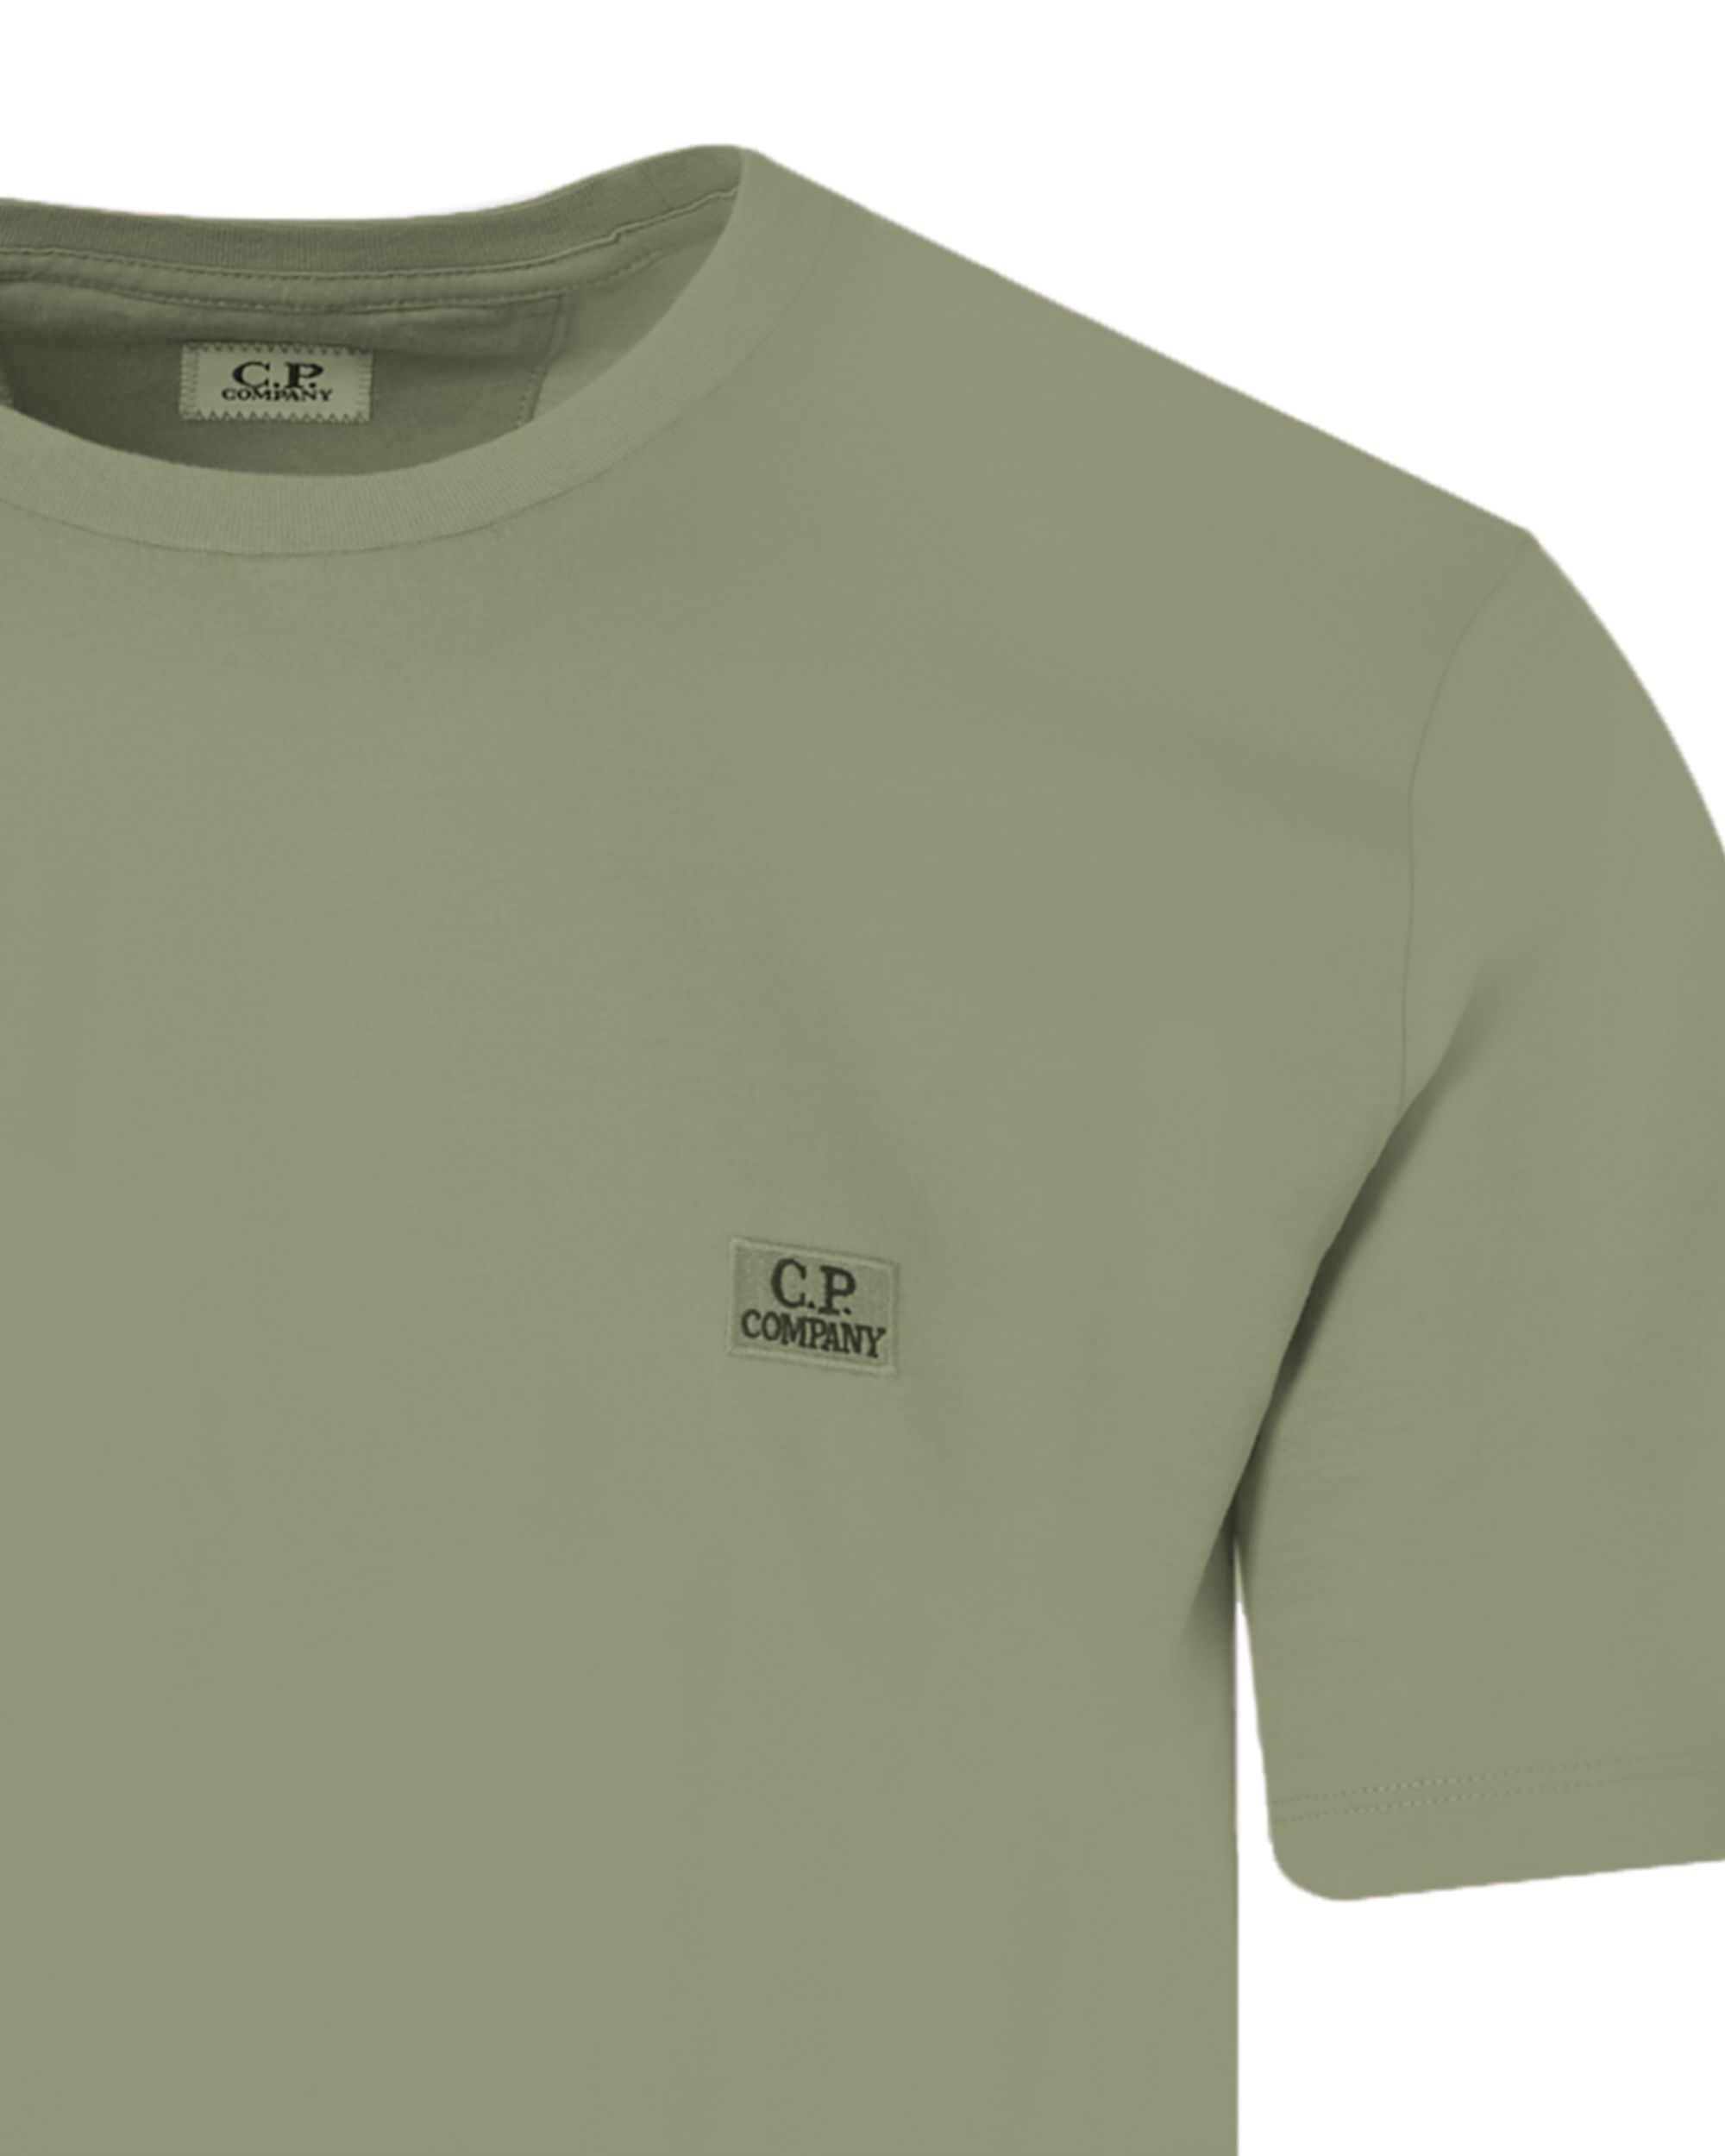 C.P Company T-shirt KM Groen 082479-001-L